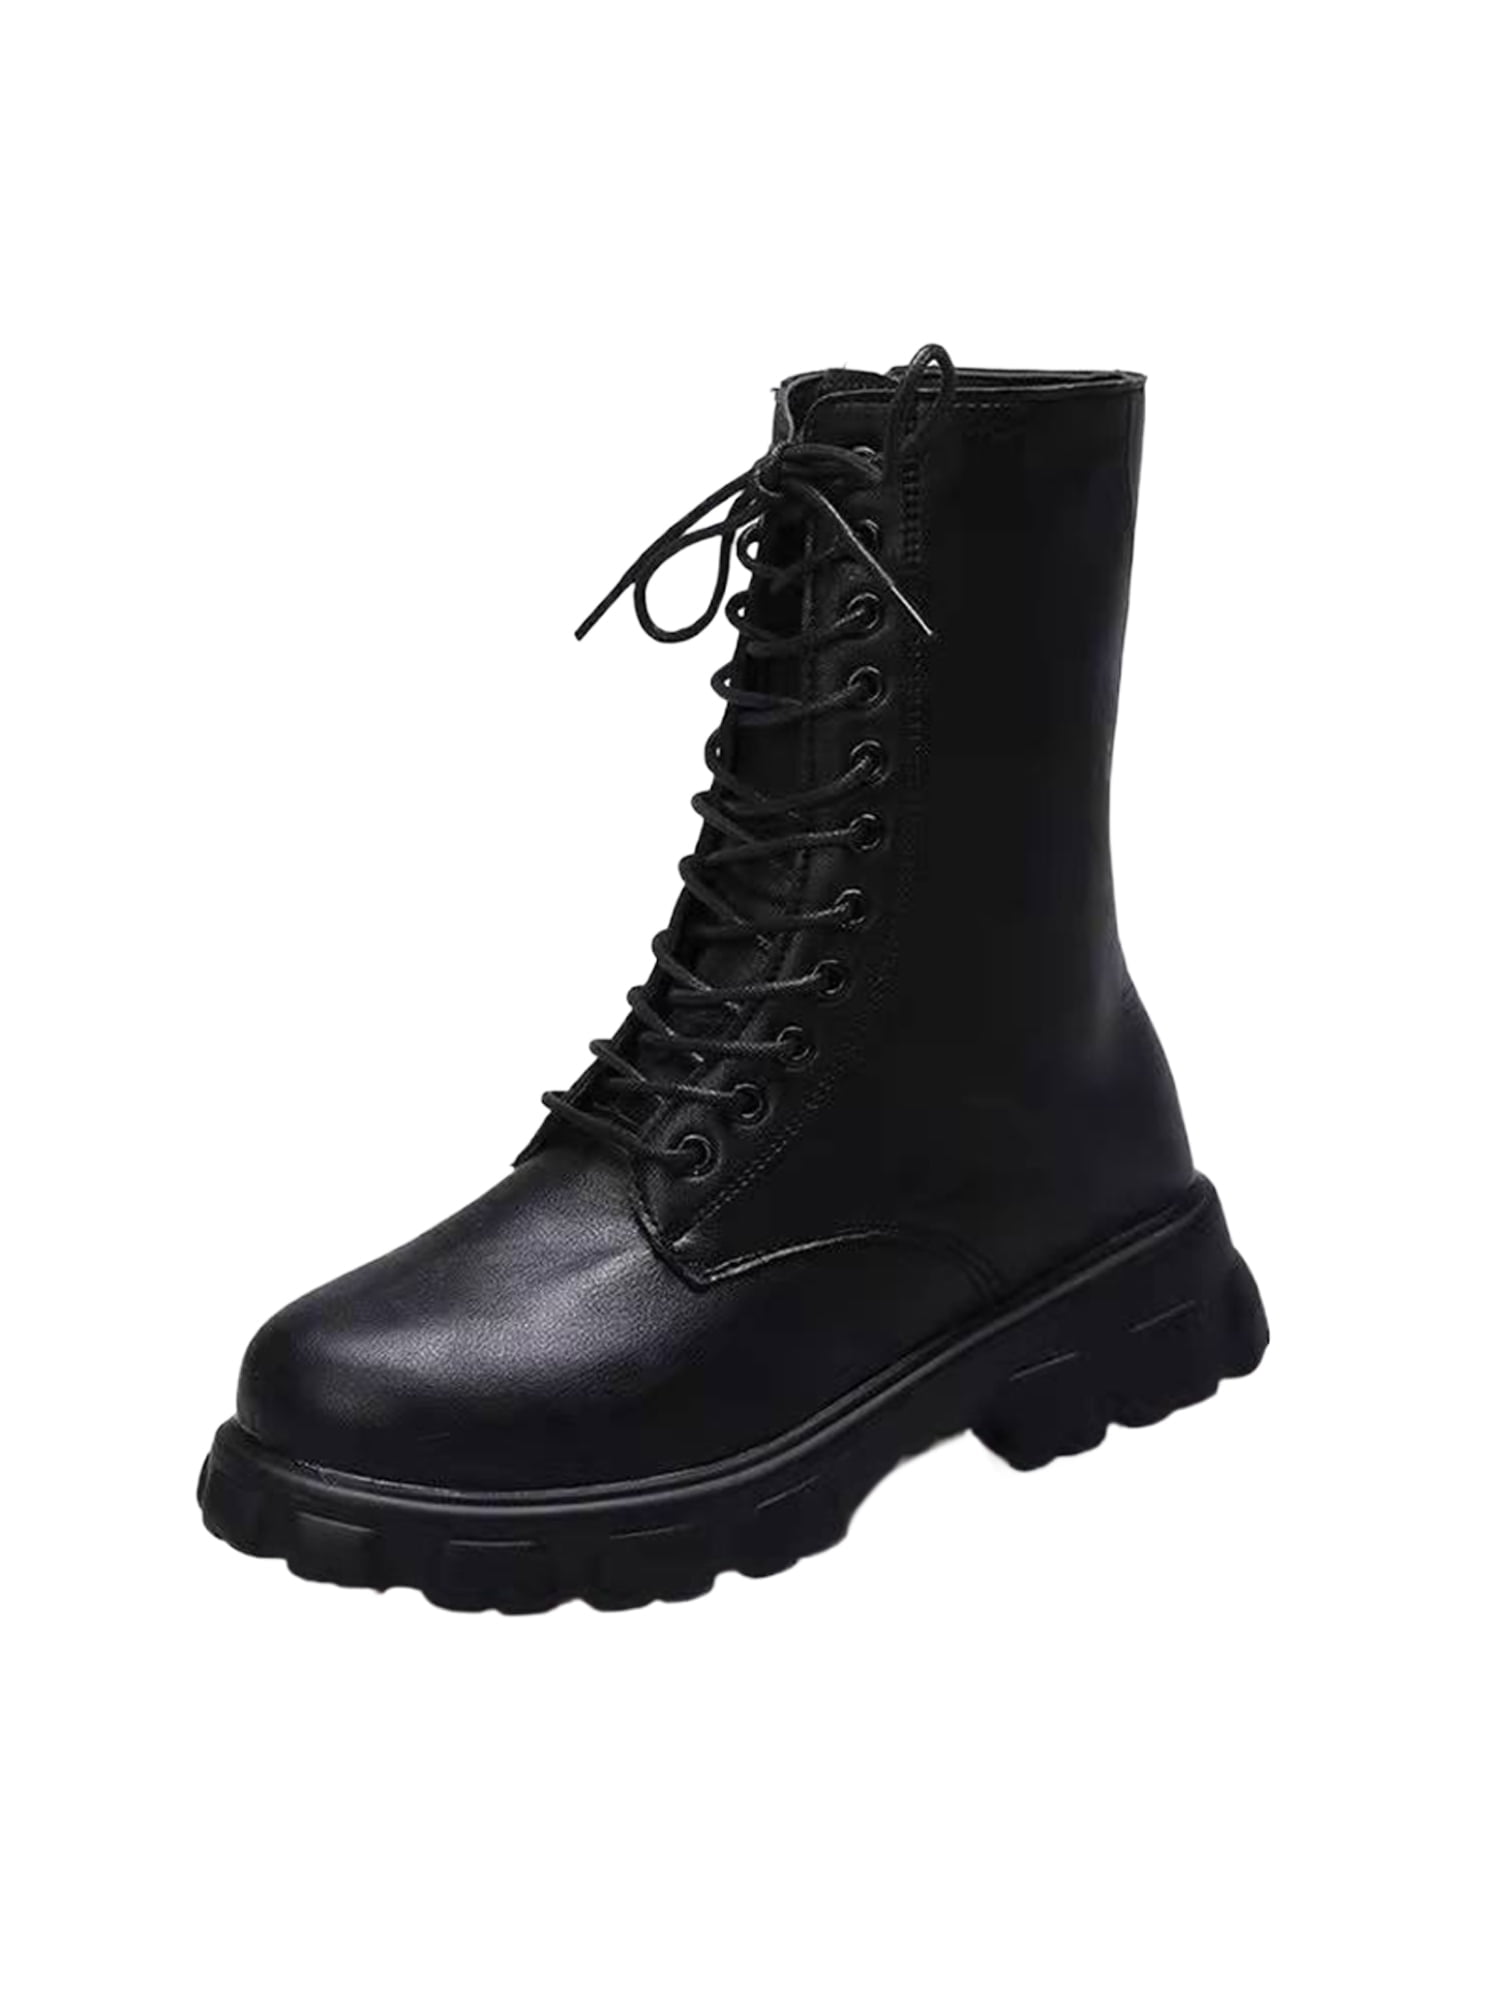 Black Combat Boots Women Platform Lace-Up Boots - Walmart.com